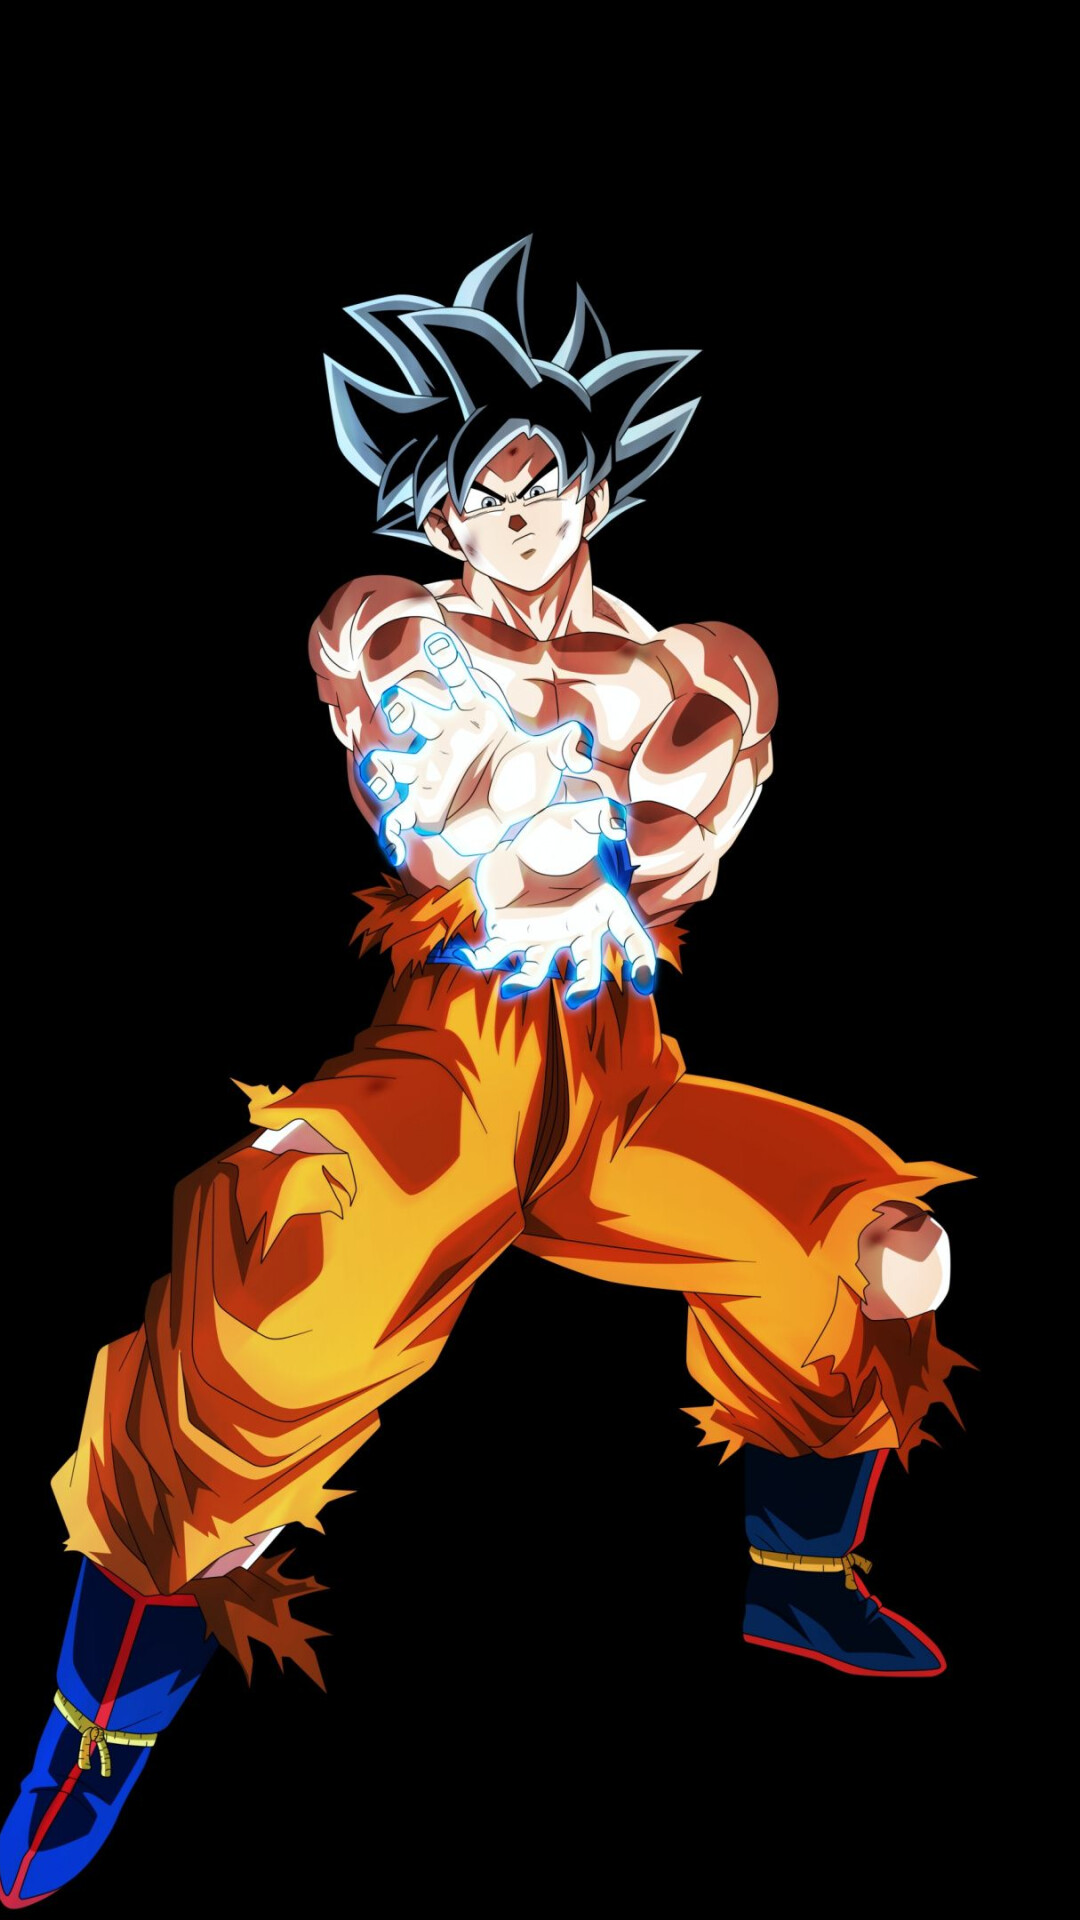 Goku Kamehameha: Martial artist possessing superhuman strength, Anime character of Dragon Ball series. 1080x1920 Full HD Wallpaper.